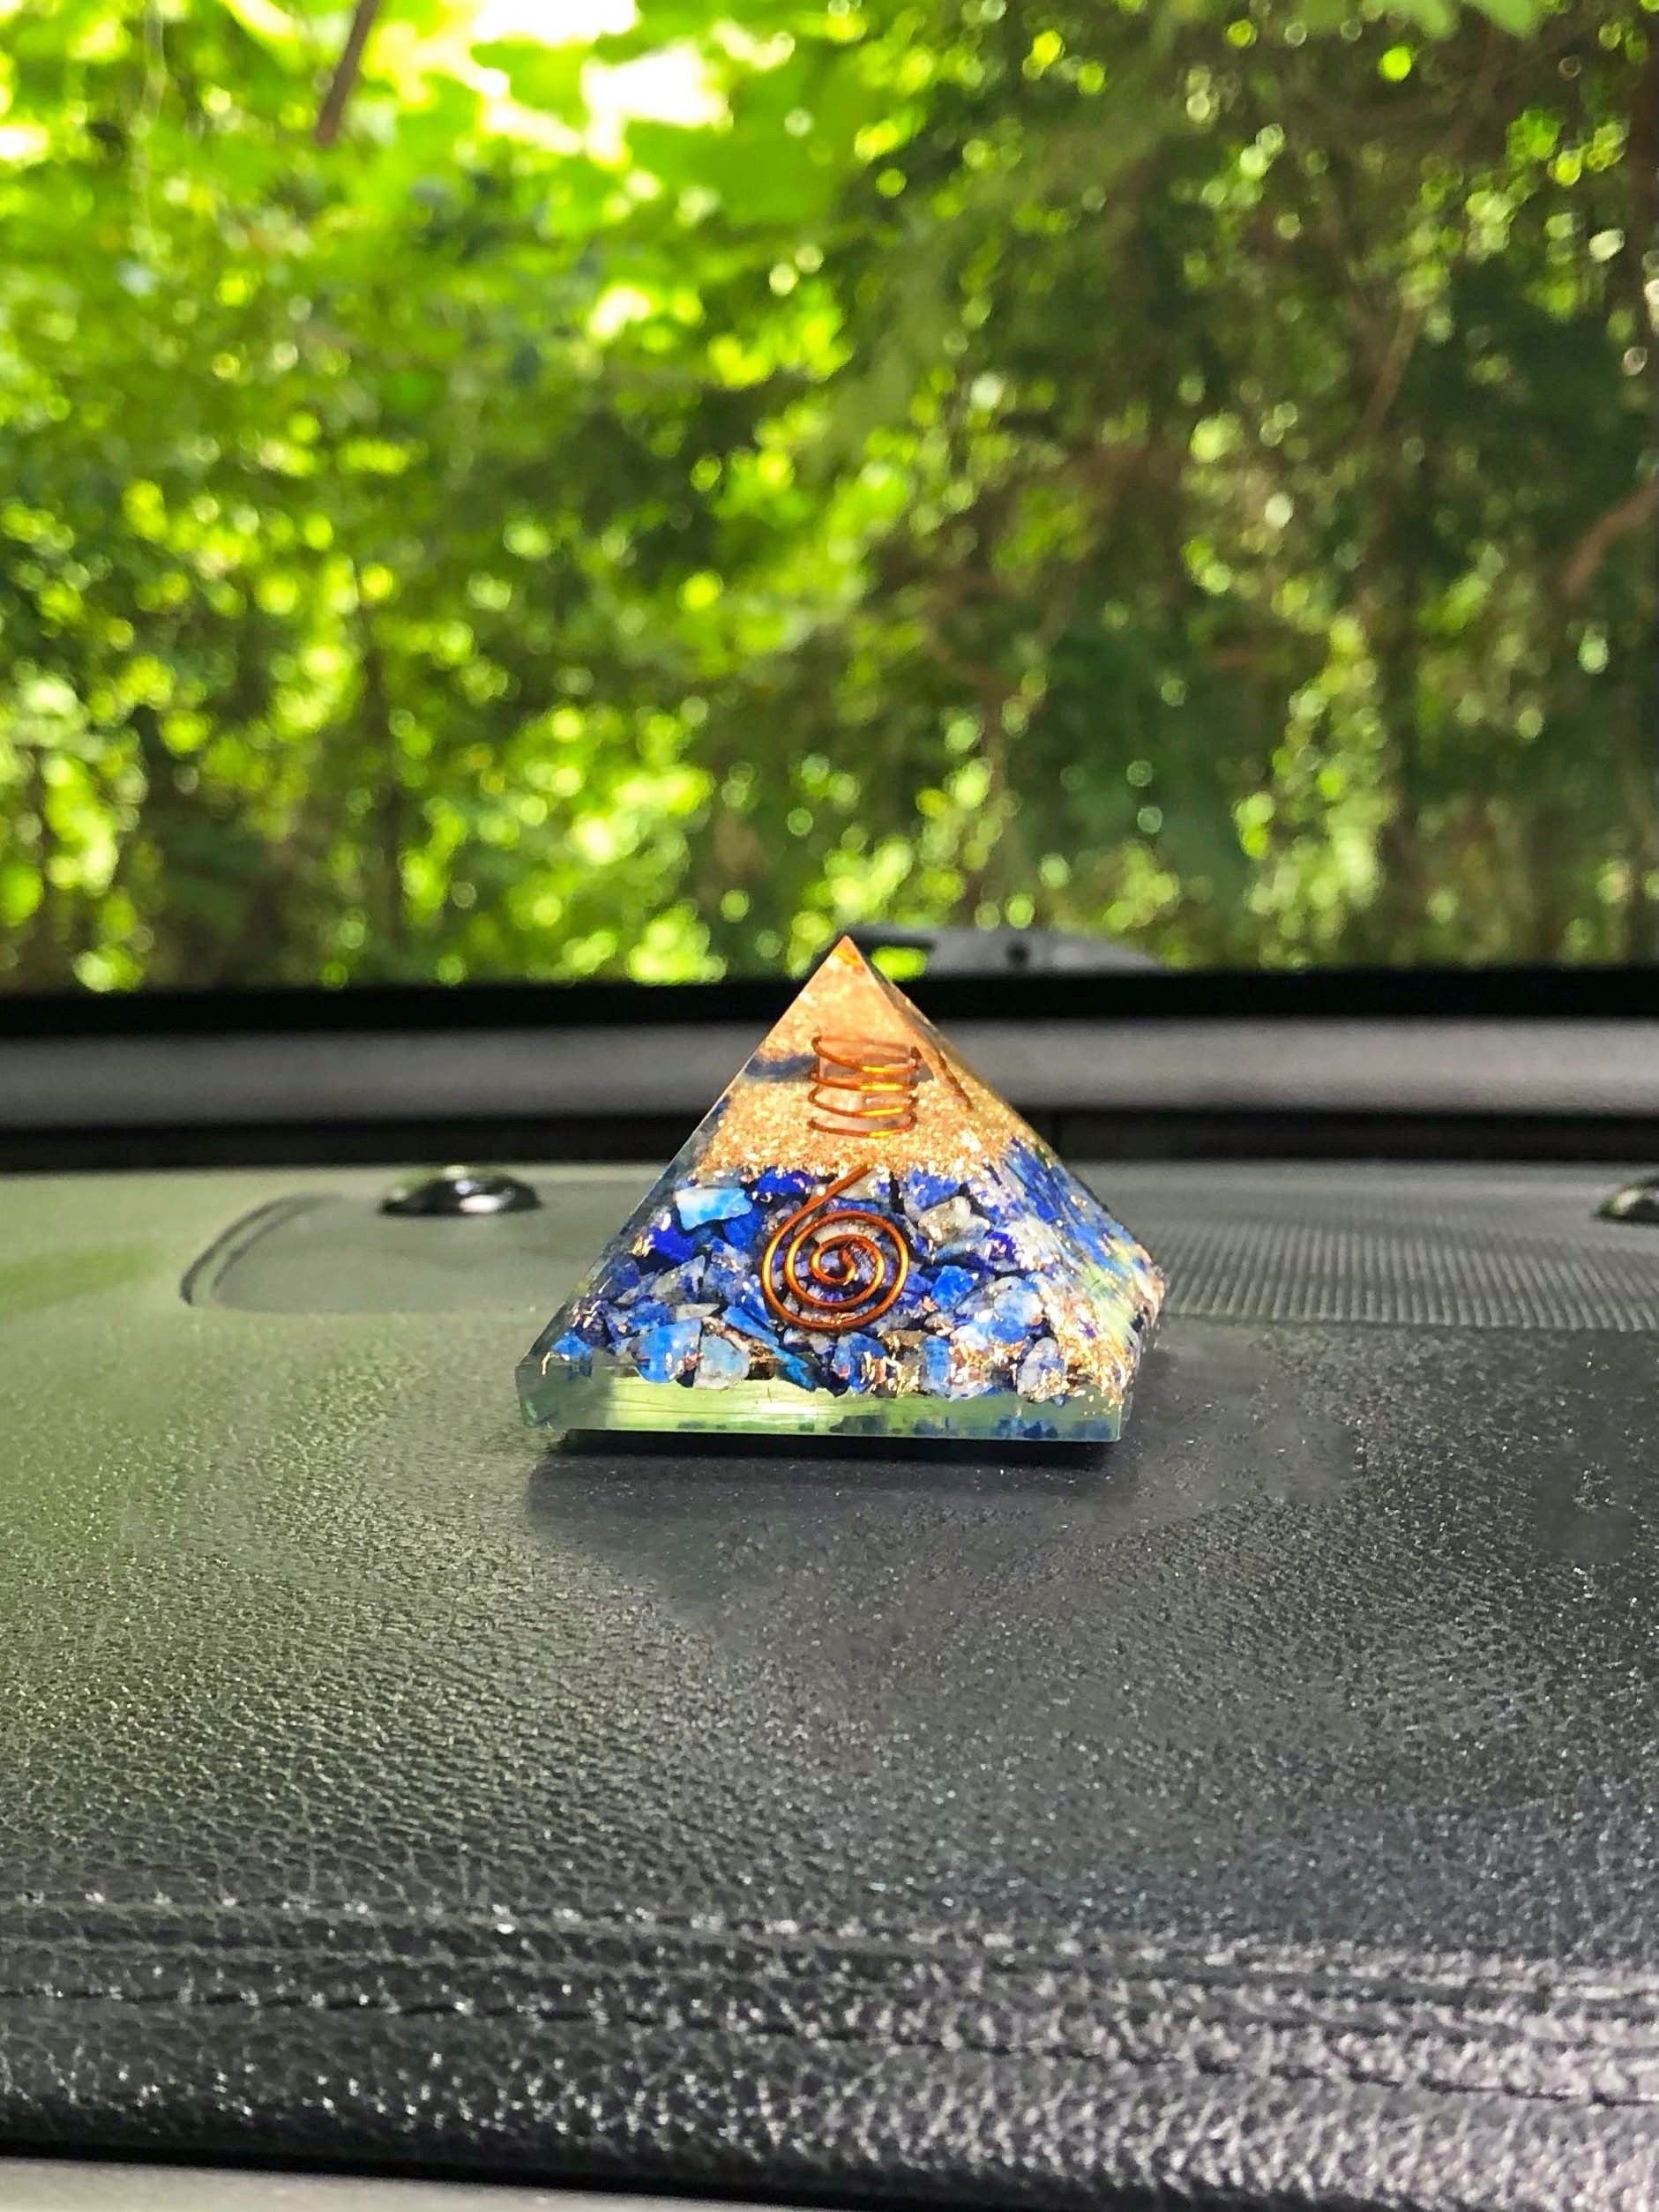 Lapis Lazuli Orgone Pyramid For Your Car